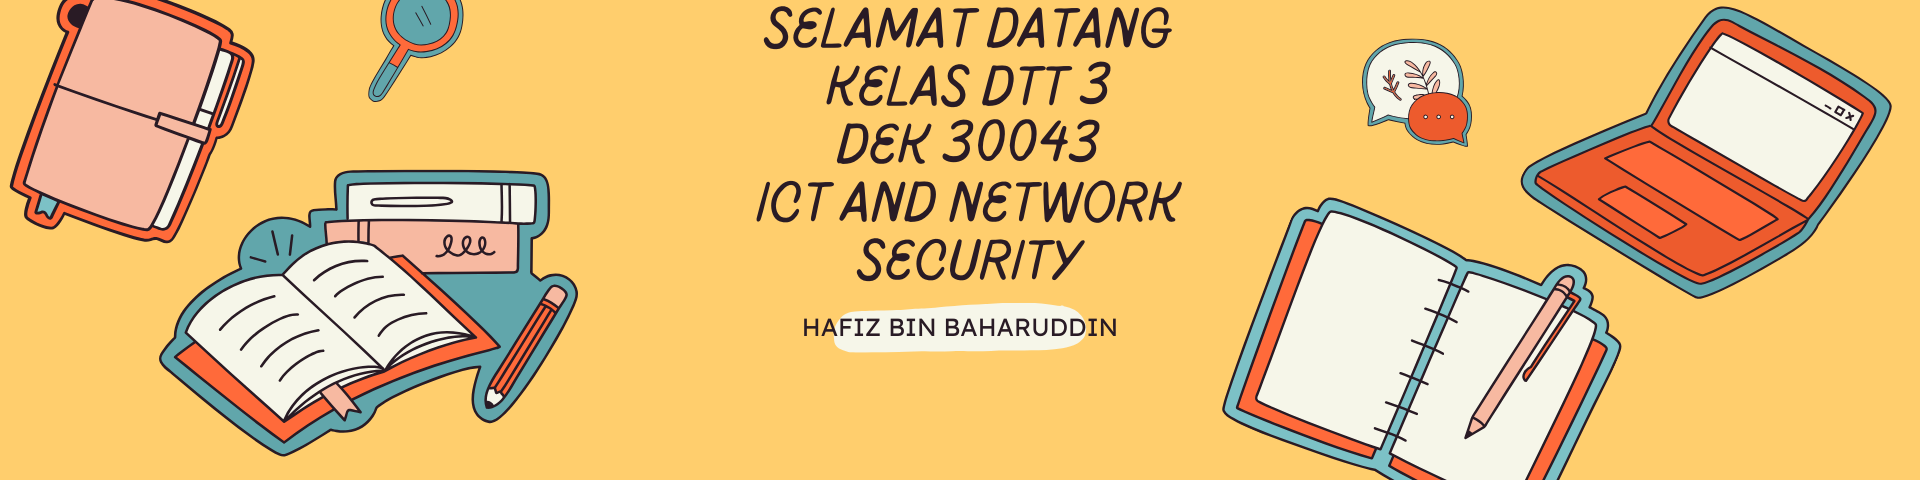 DEK 30043 ICT AND NETWORK SECURITY